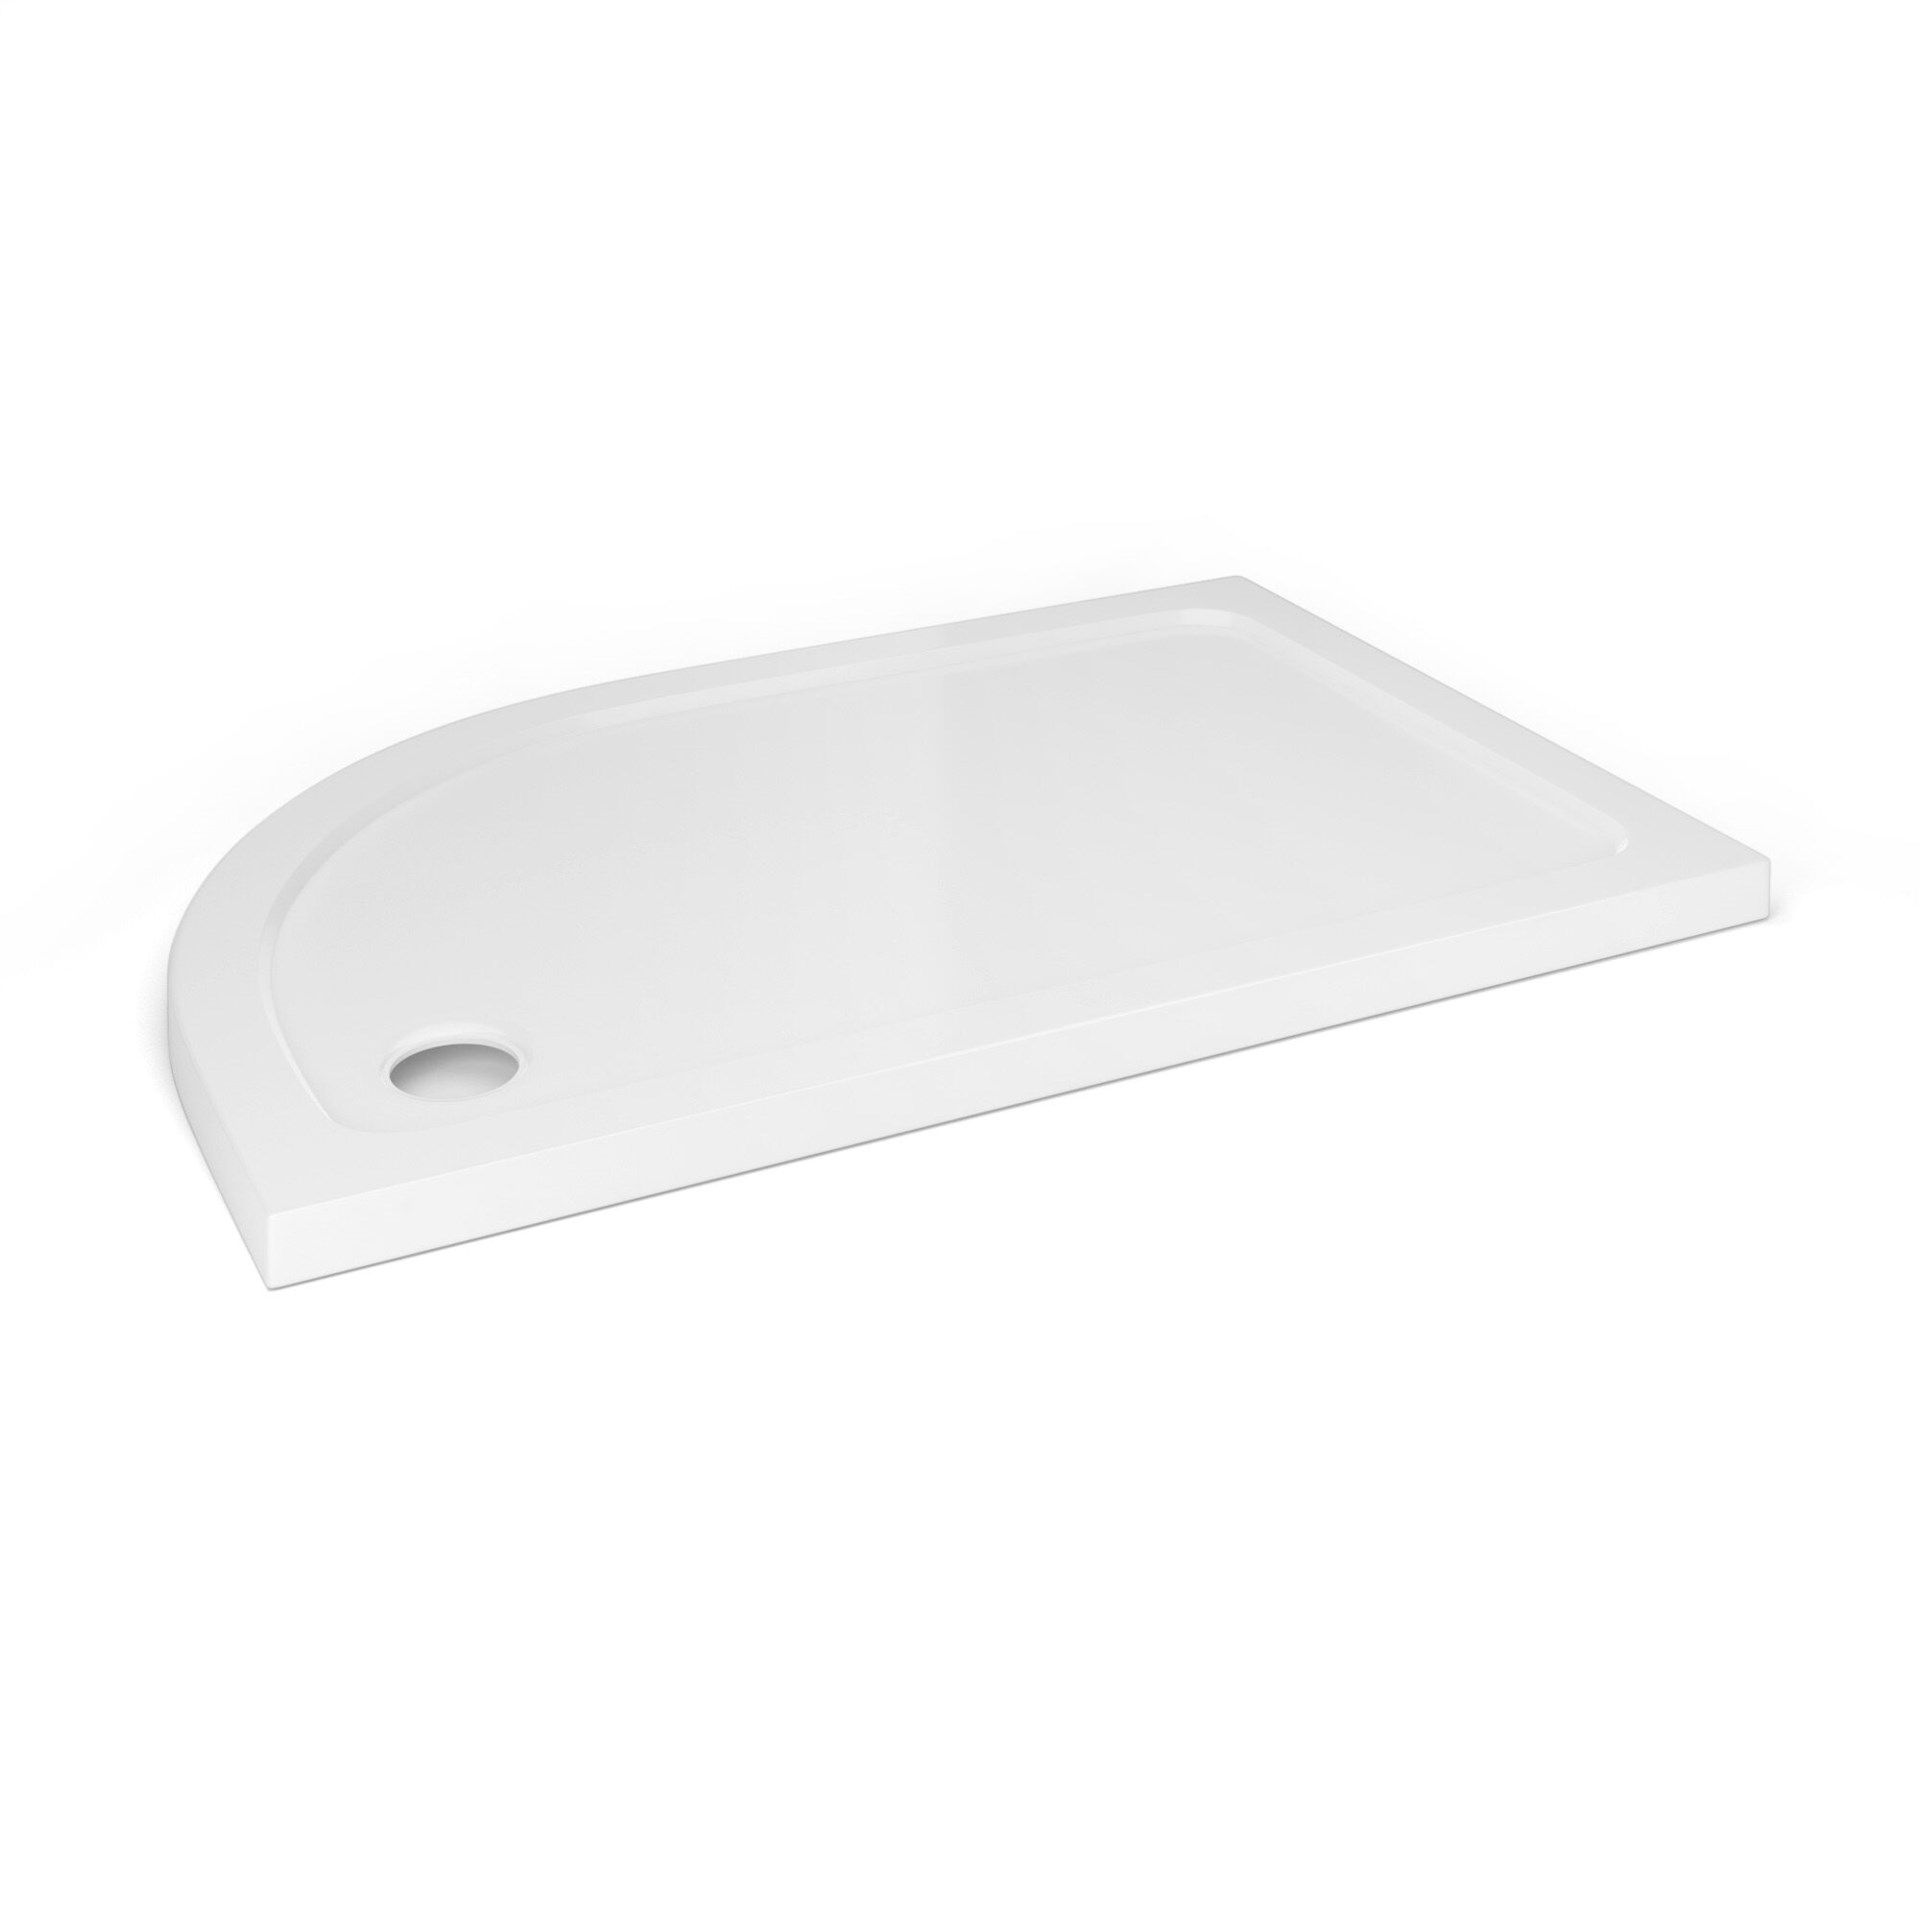 (SP236) 1000x900mm Offset Quadrant Ultra Slim Stone Shower Tray - Left. Low profile ultra slim...